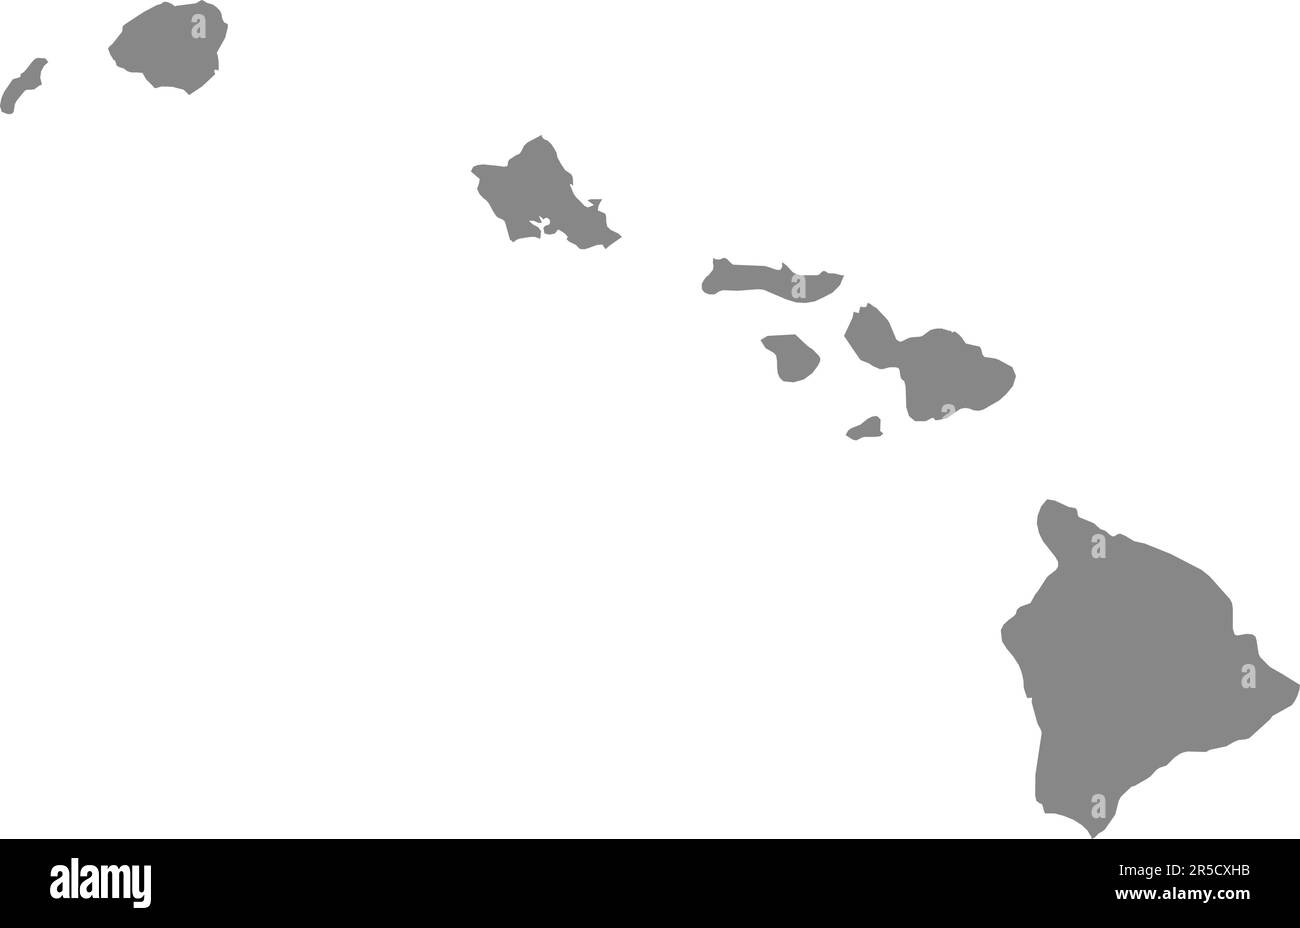 GRAUE CMYK-Farbkarte von HAWAII, USA Stock Vektor